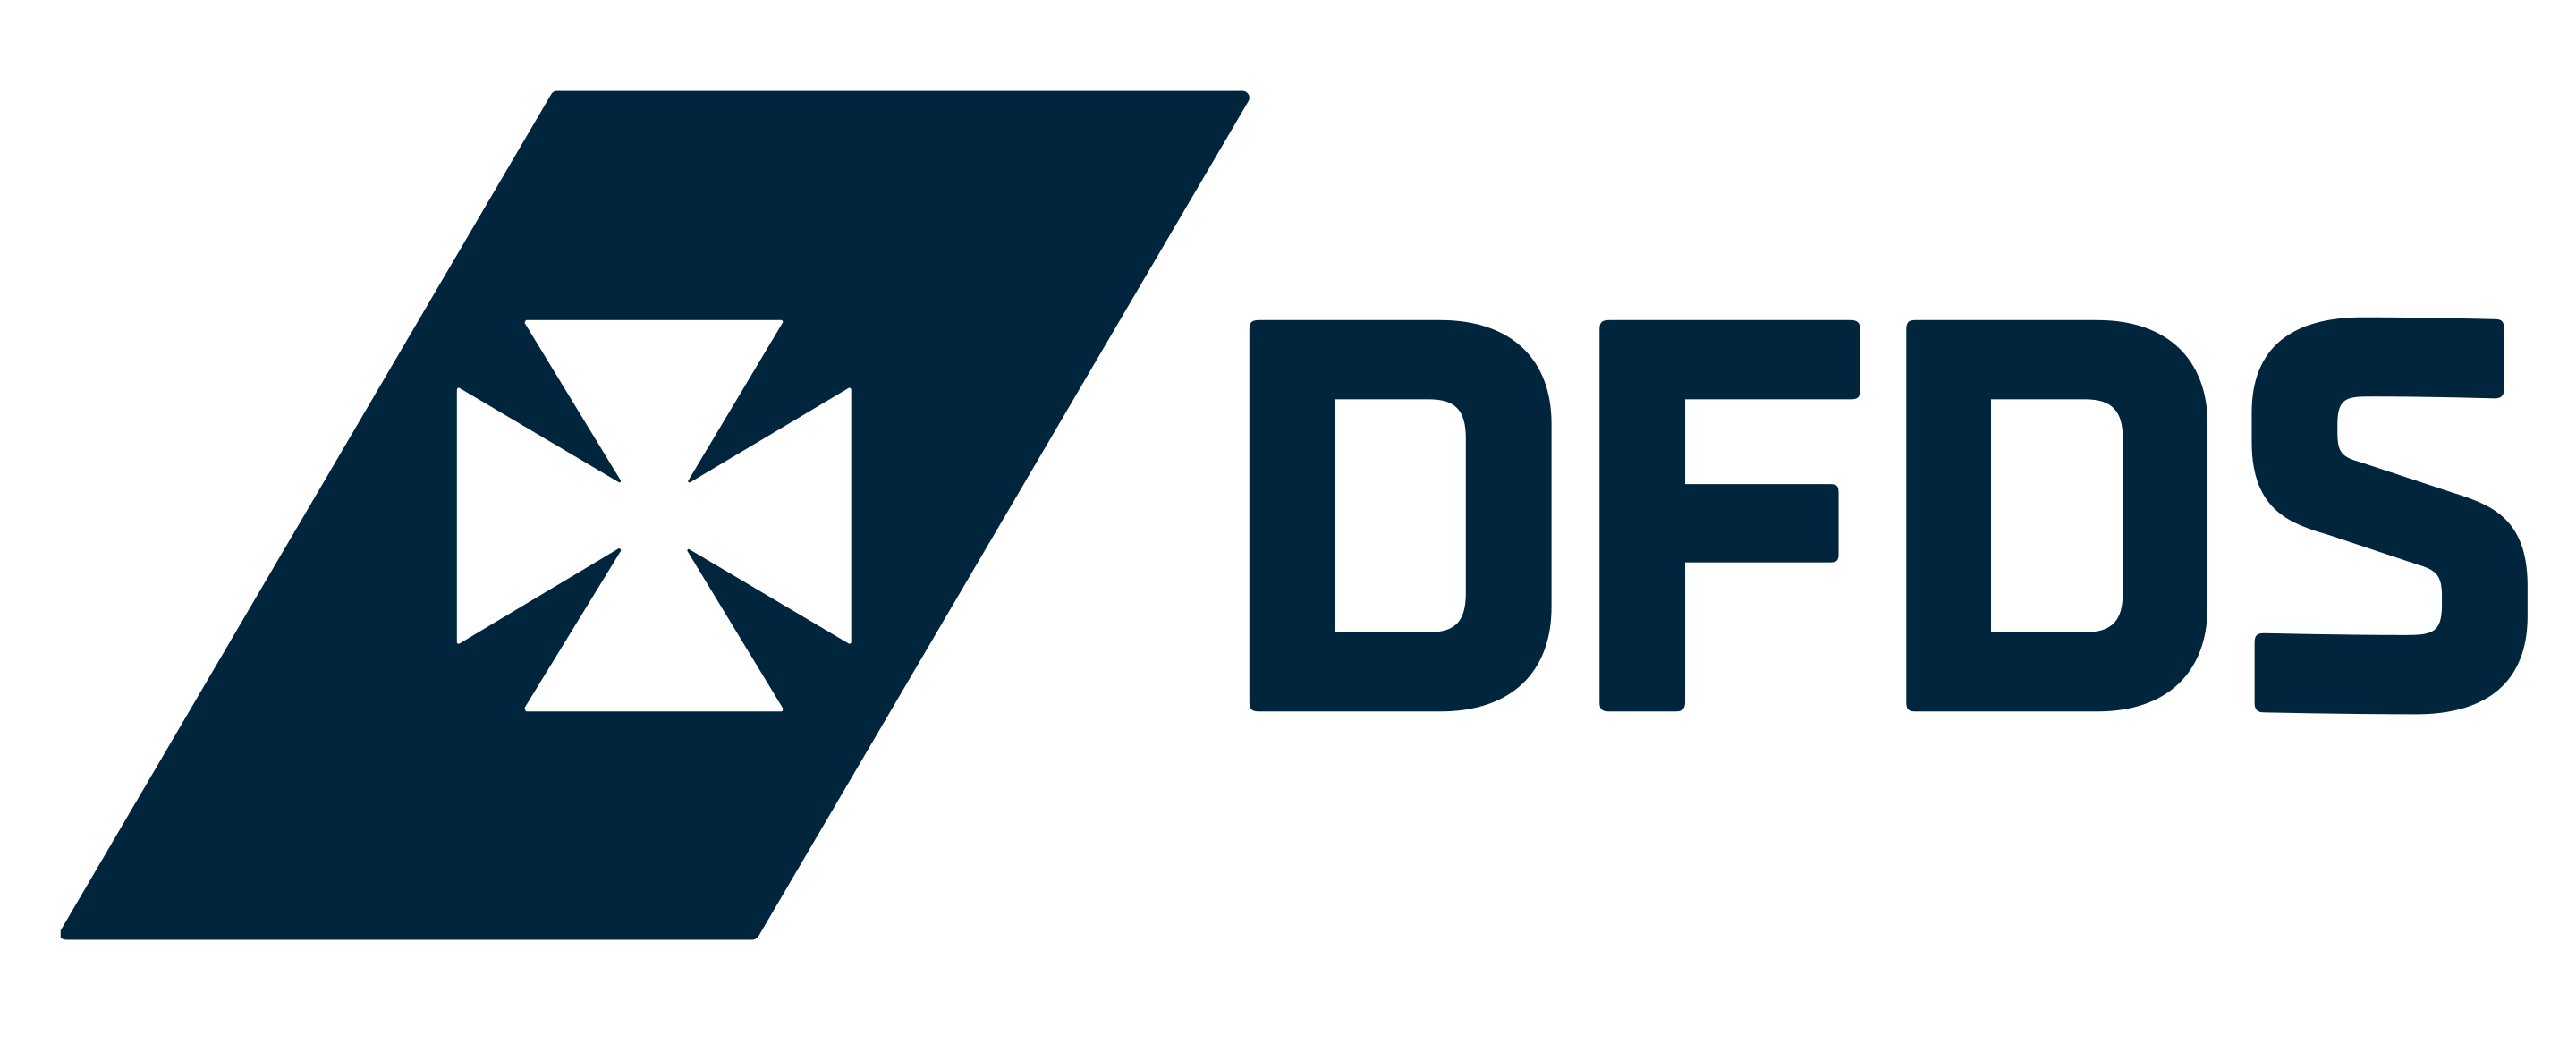 Sigla lui DFDS